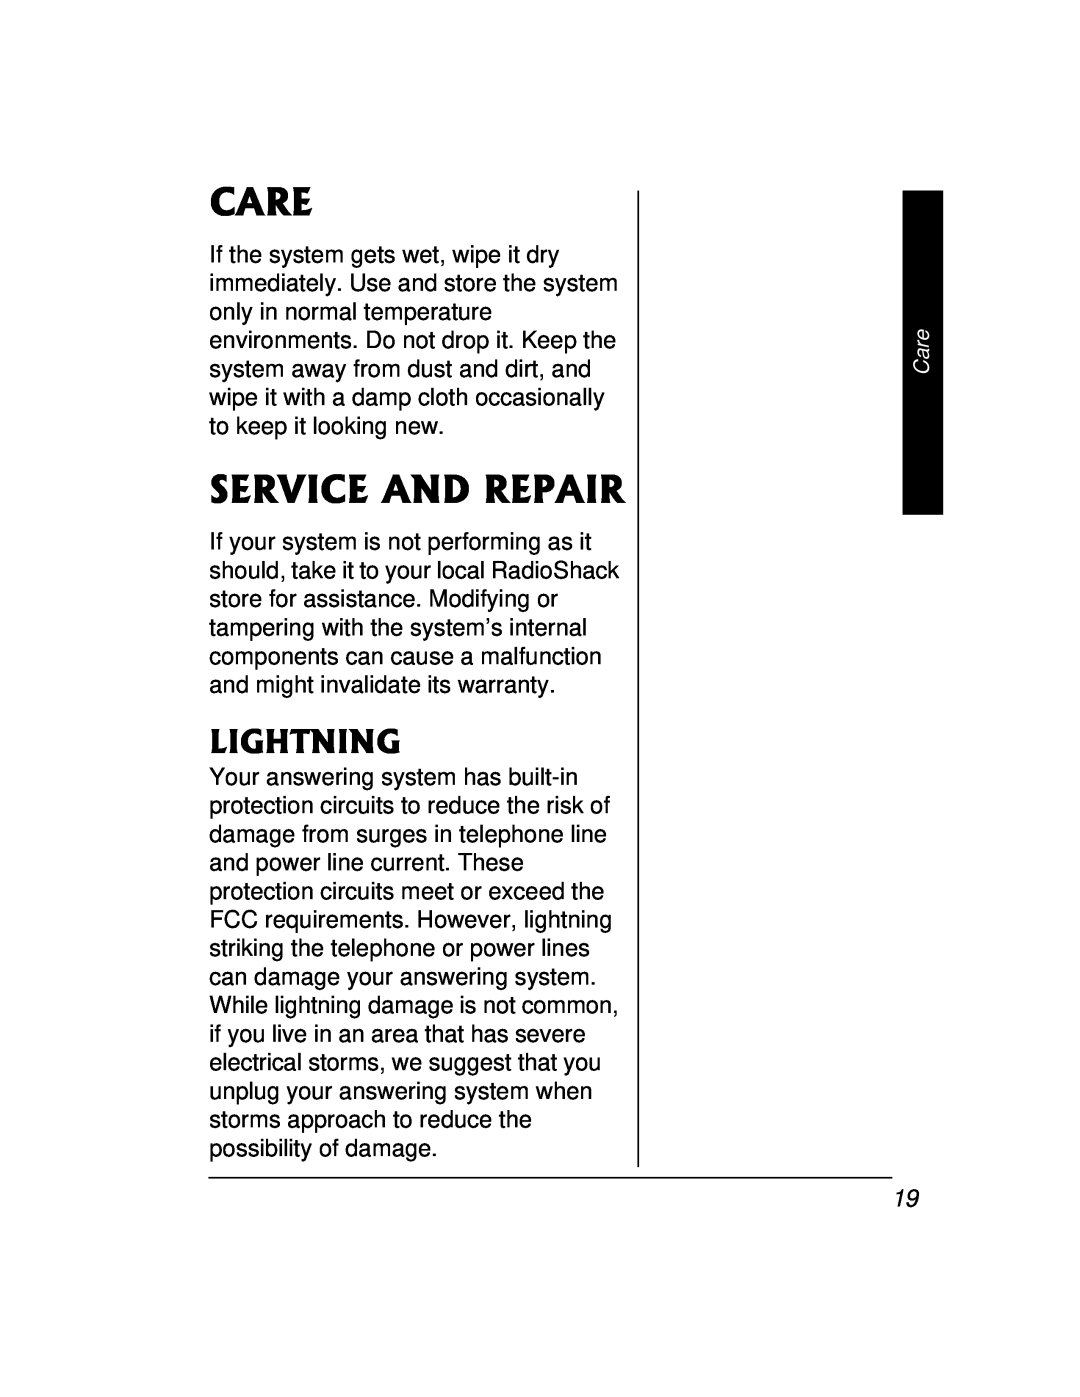 Radio Shack 43-3888 owner manual Care, Service And Repair, Lightning 